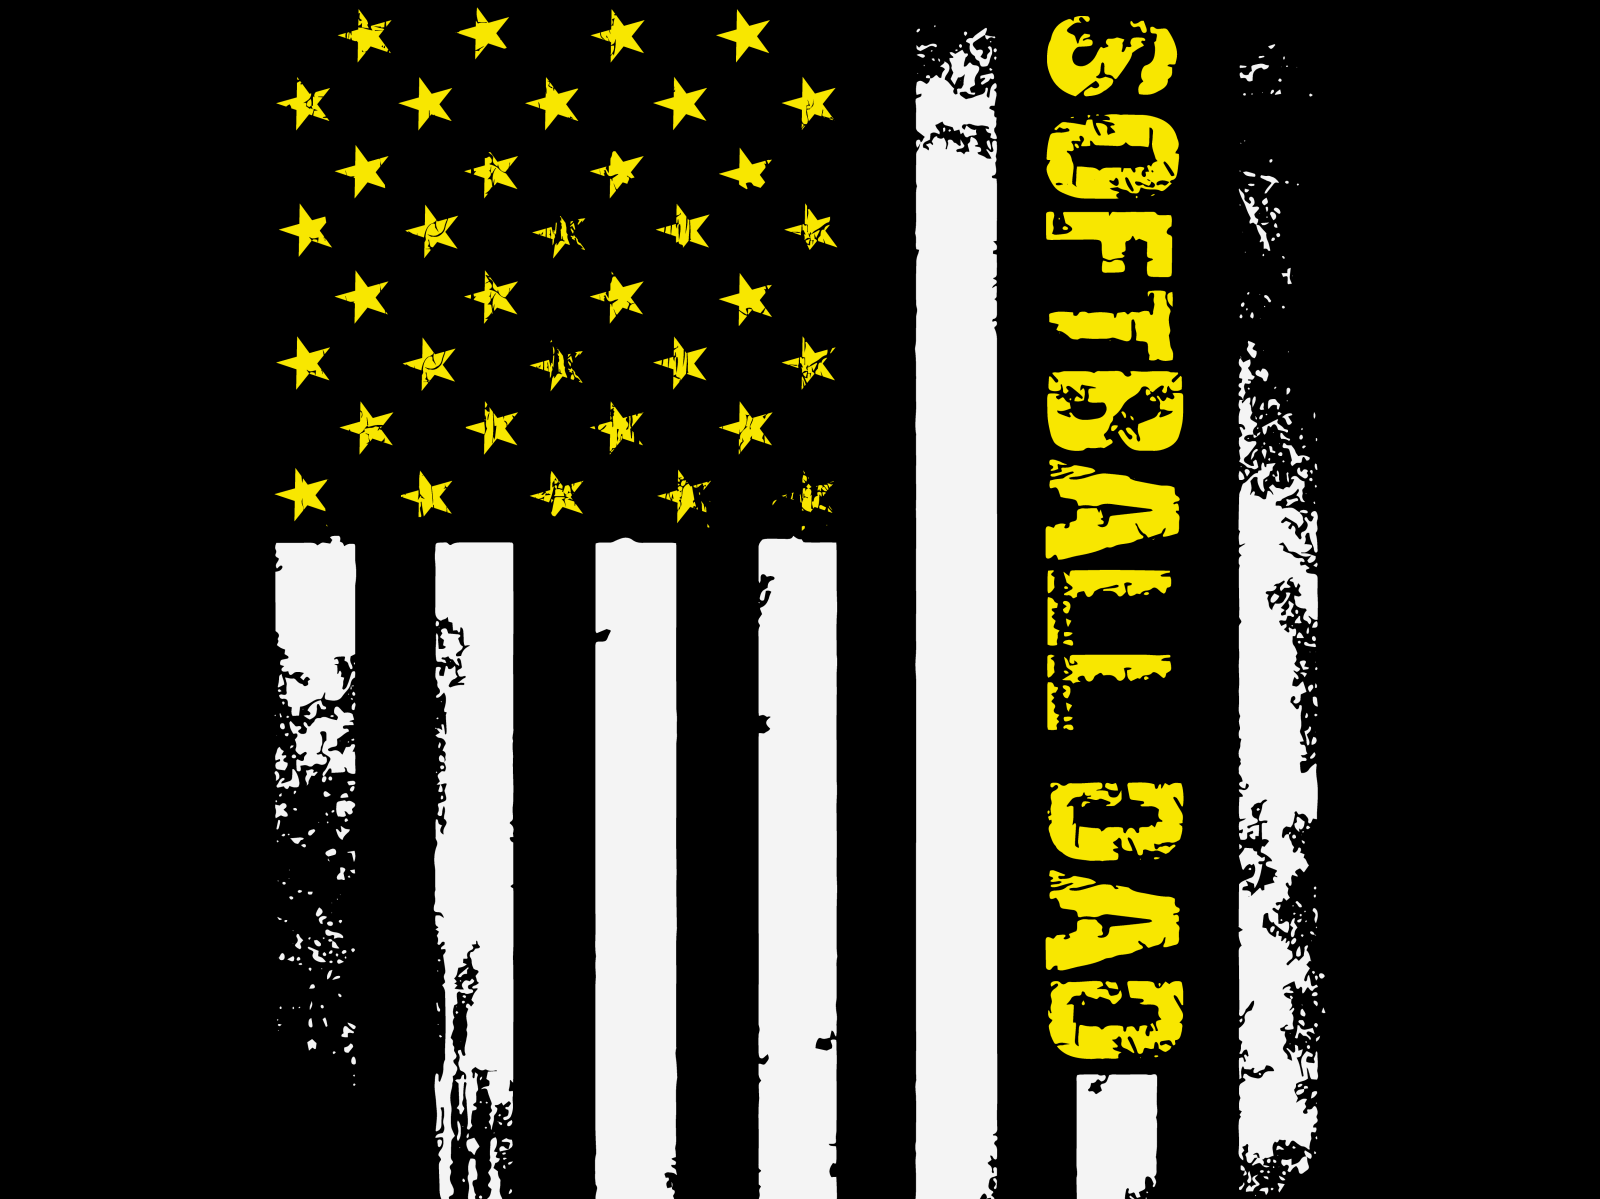 SOFTBALL USA FLAG by abdel on Dribbble